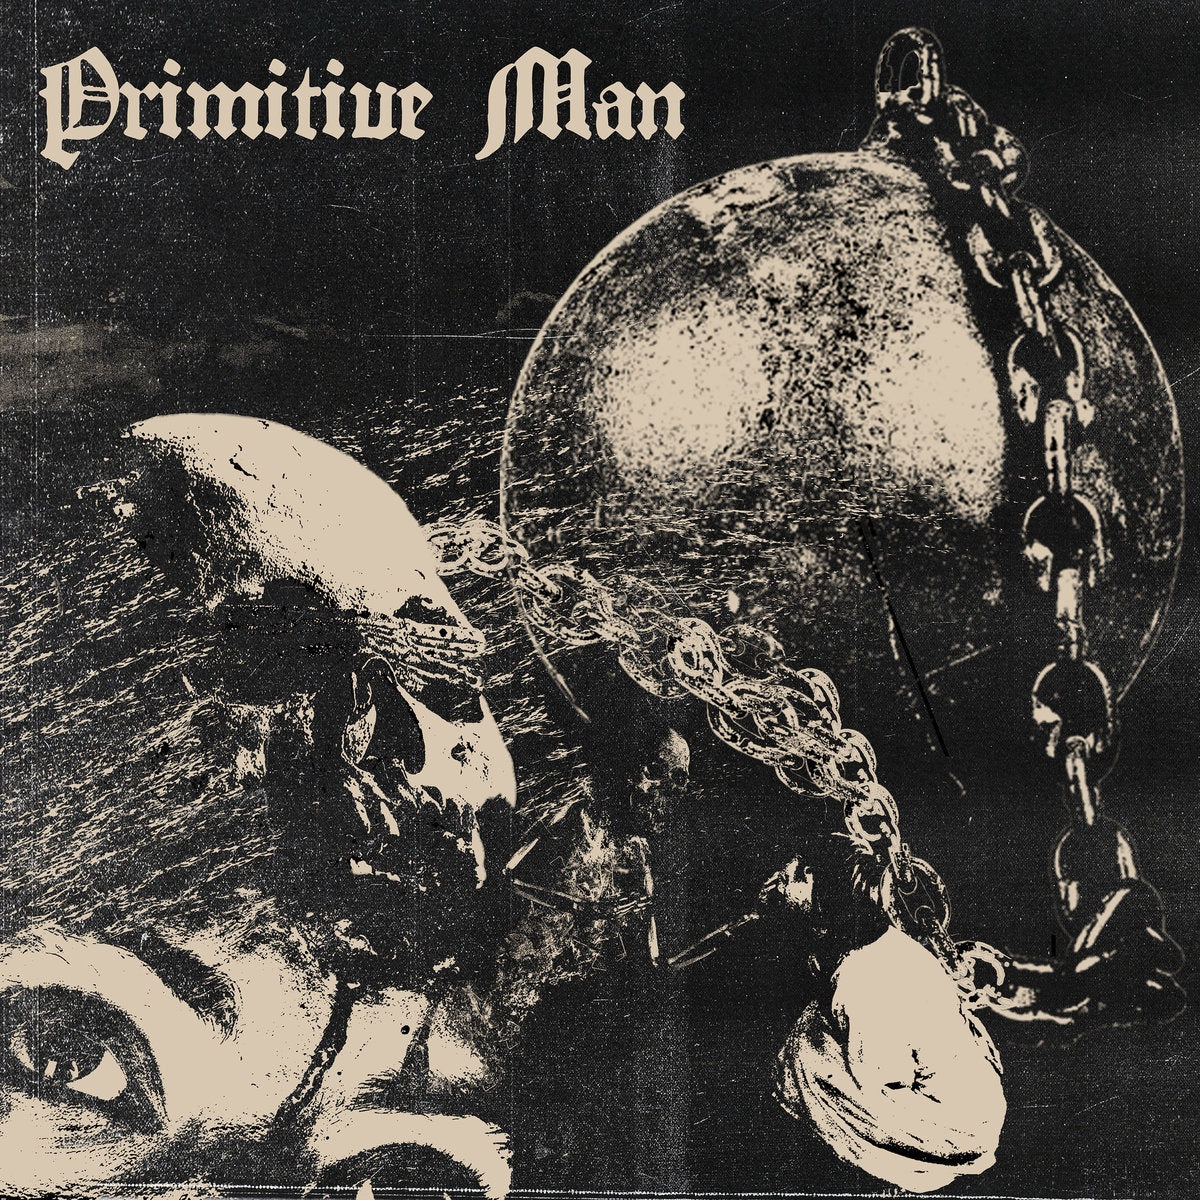 Primitive Man - Caustic - New Vinyl Record 2017 Relapse Records 2-LP Gatefold Pressing with Download - Blackened Doom / Sludge (FFO: Thou, Conan, Khanate)